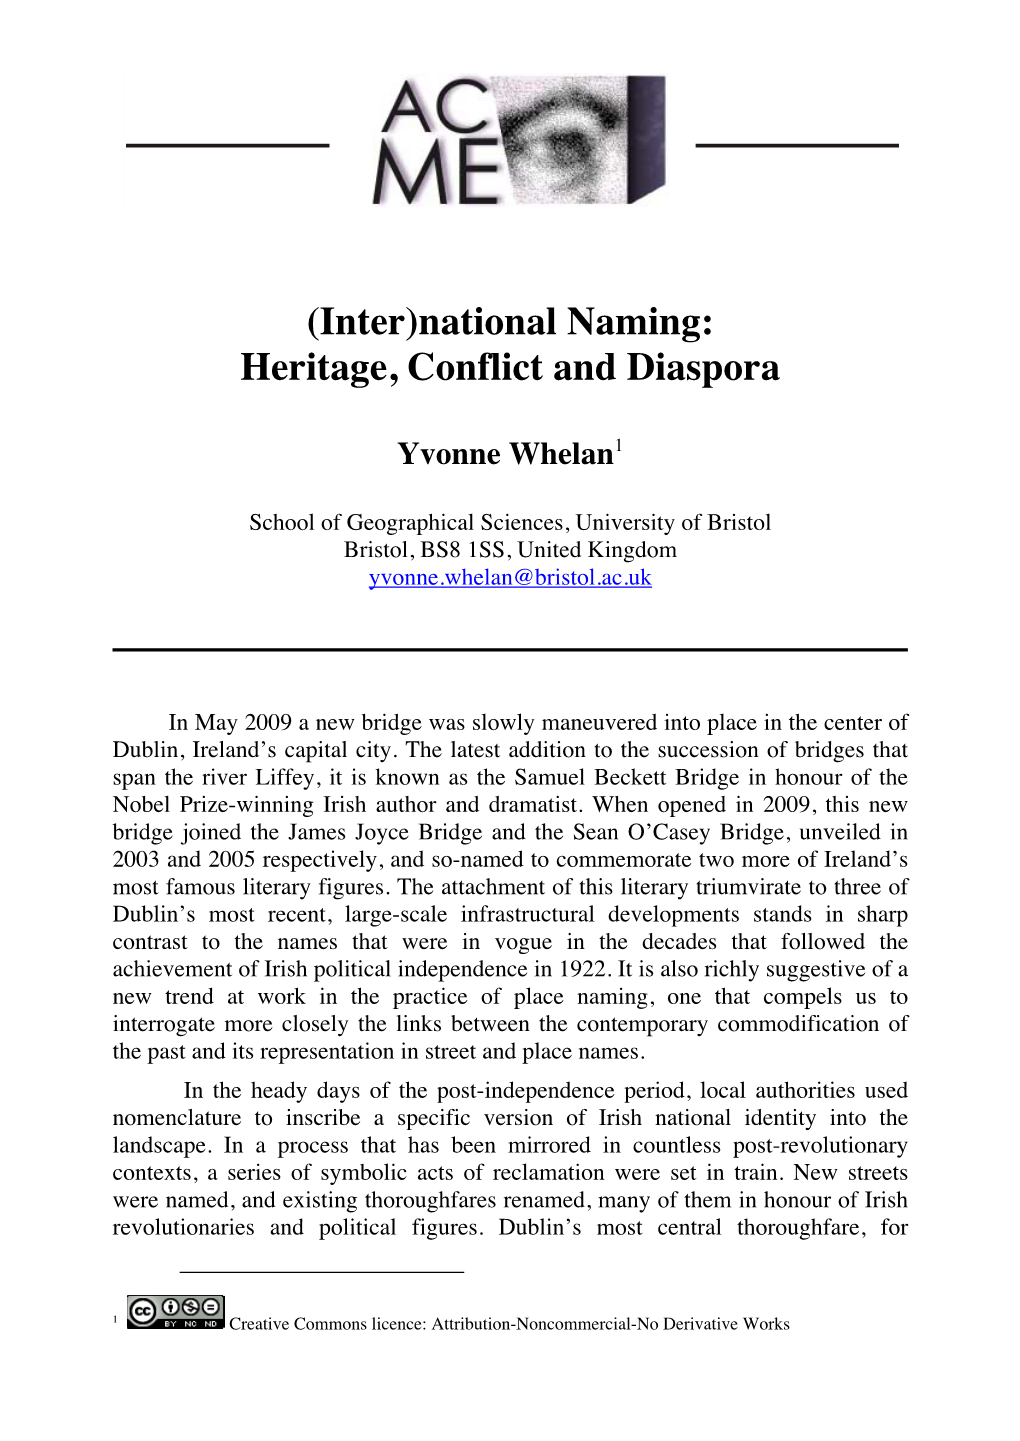 (Inter)National Naming: Heritage, Conflict and Diaspora